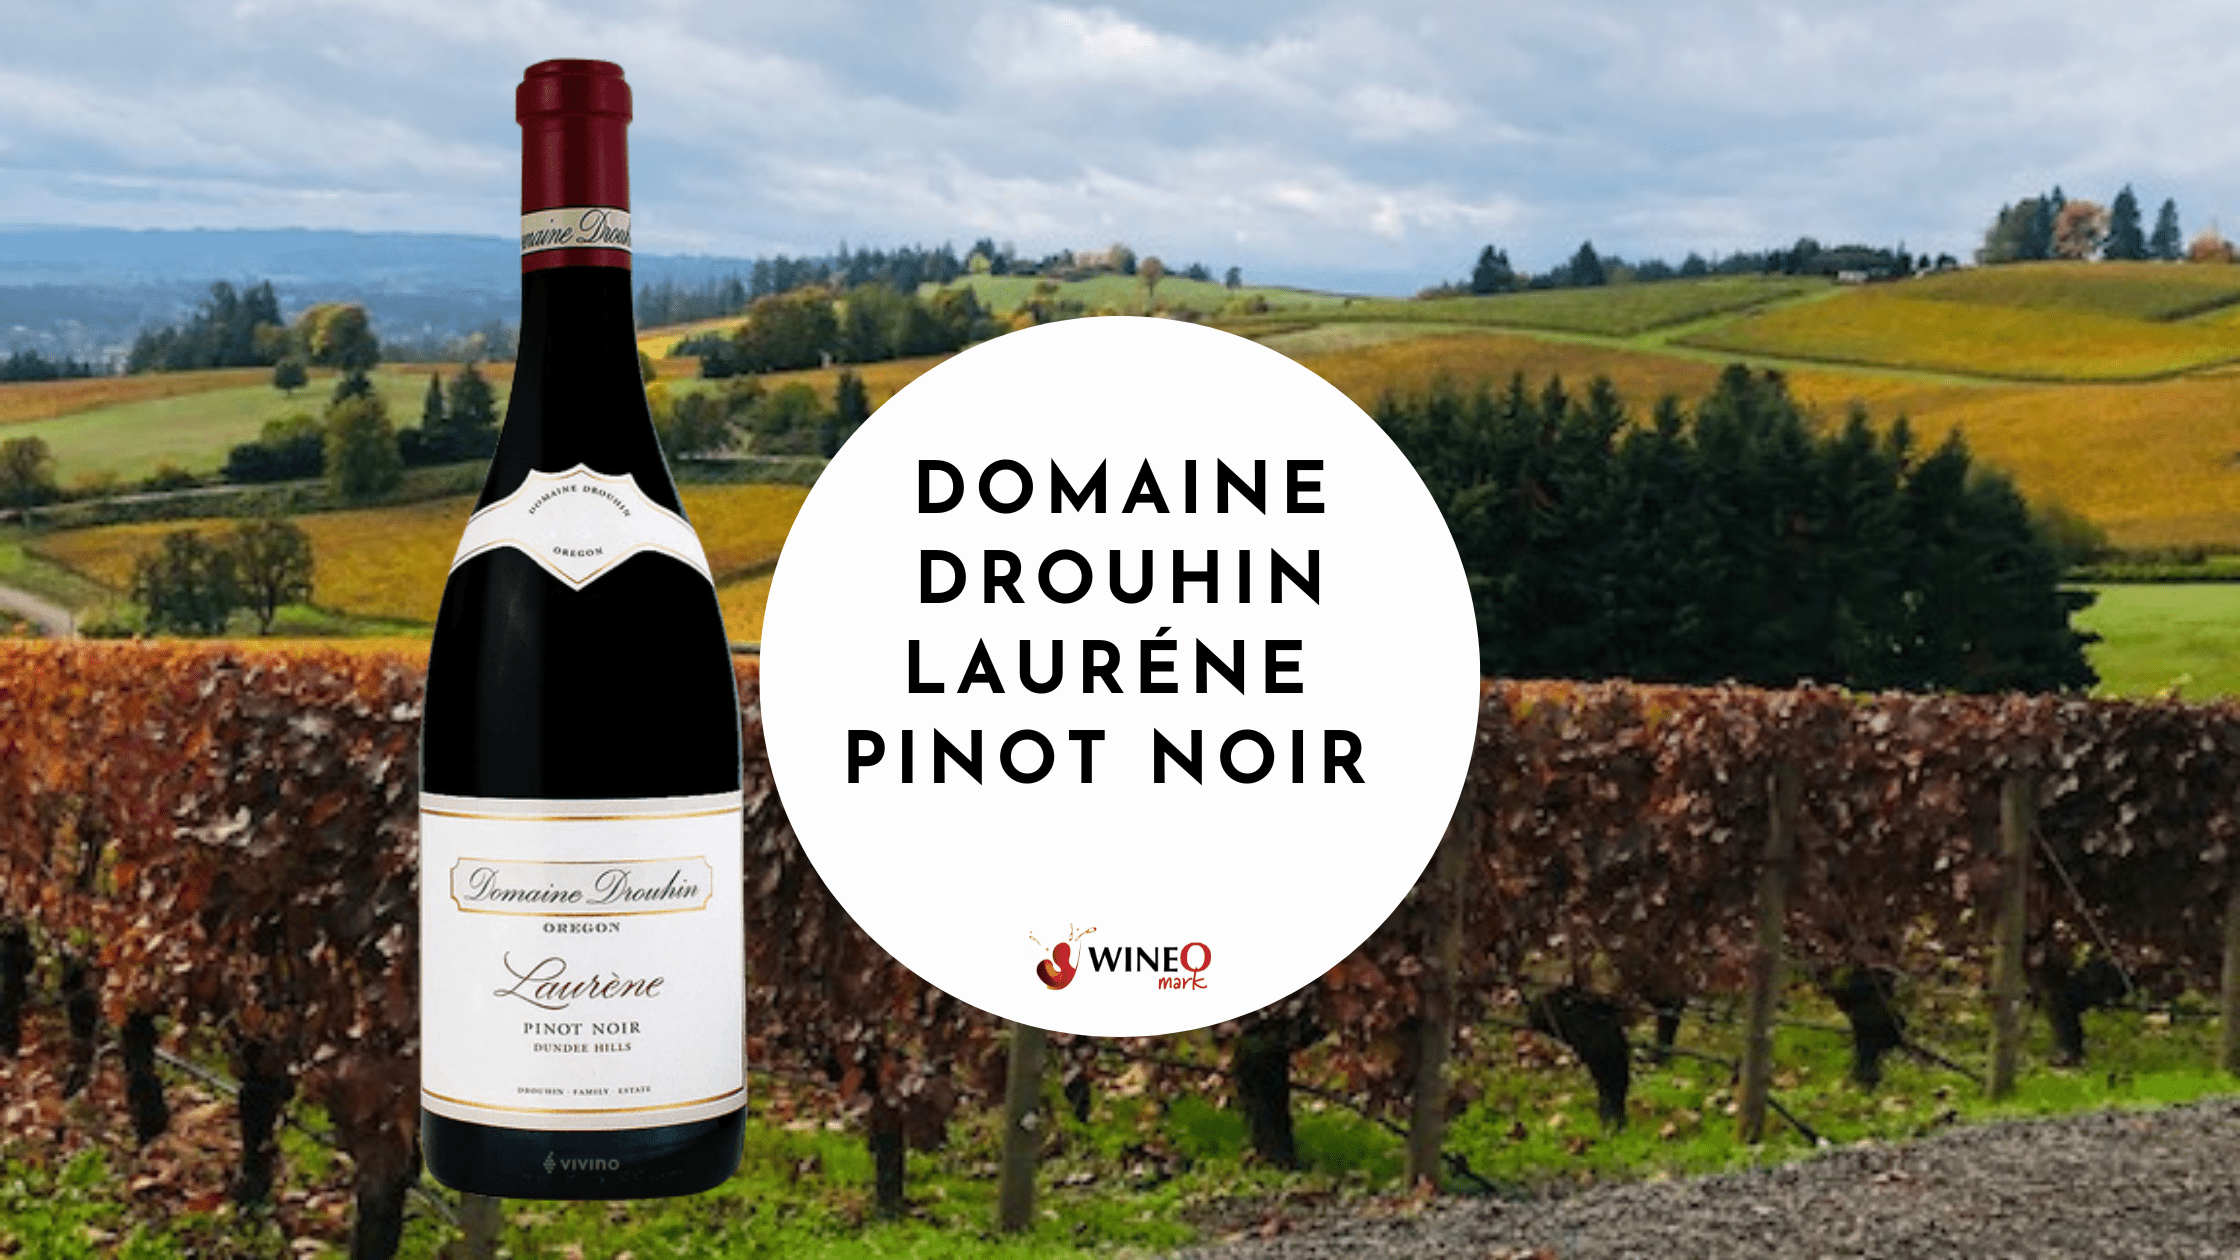 Domaine Drouhin Lauréne Pinot Noir - WineO Mark Review